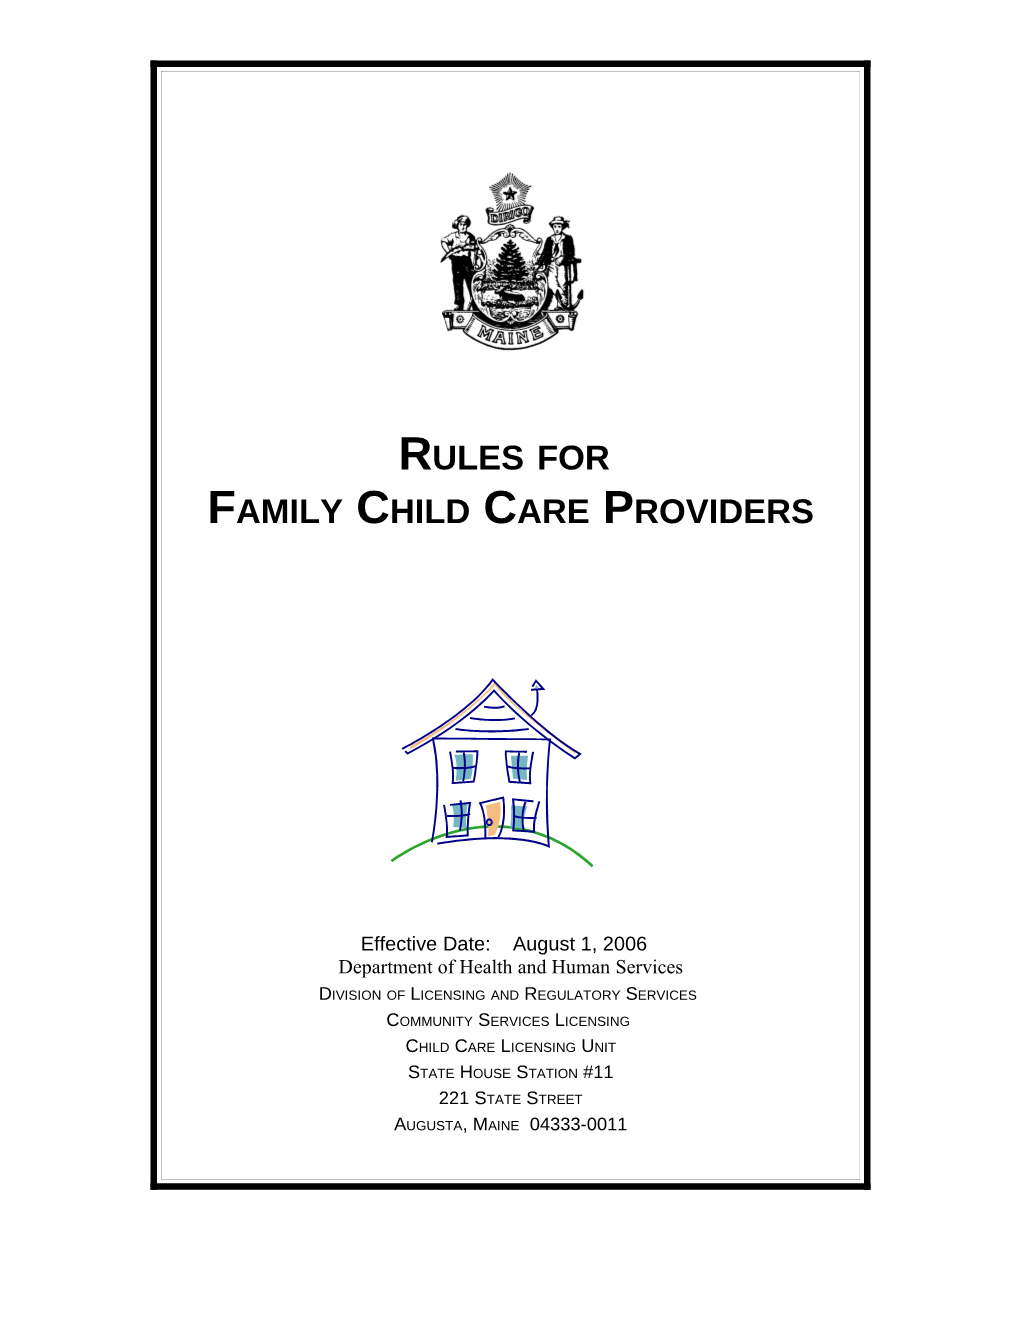 Family Child Care Providers